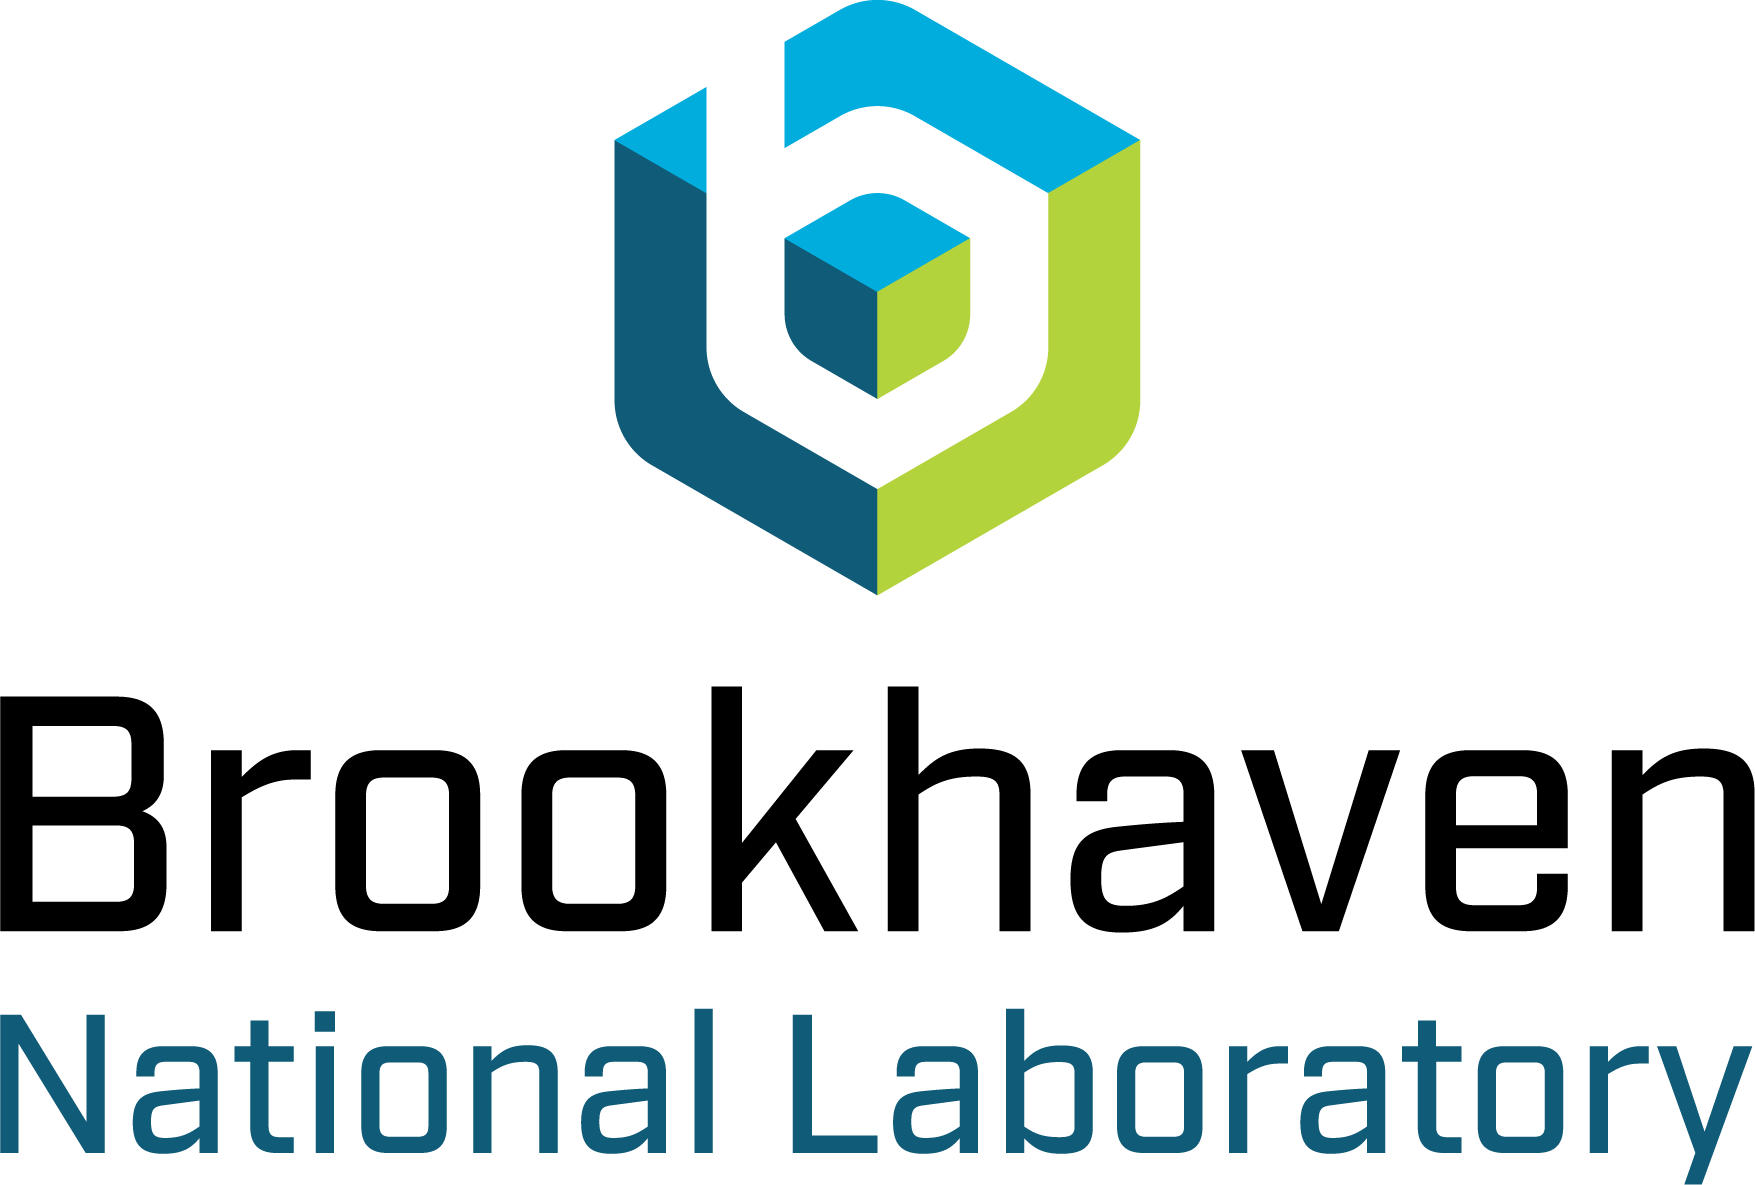 Brookhaven National Laboratory Logo